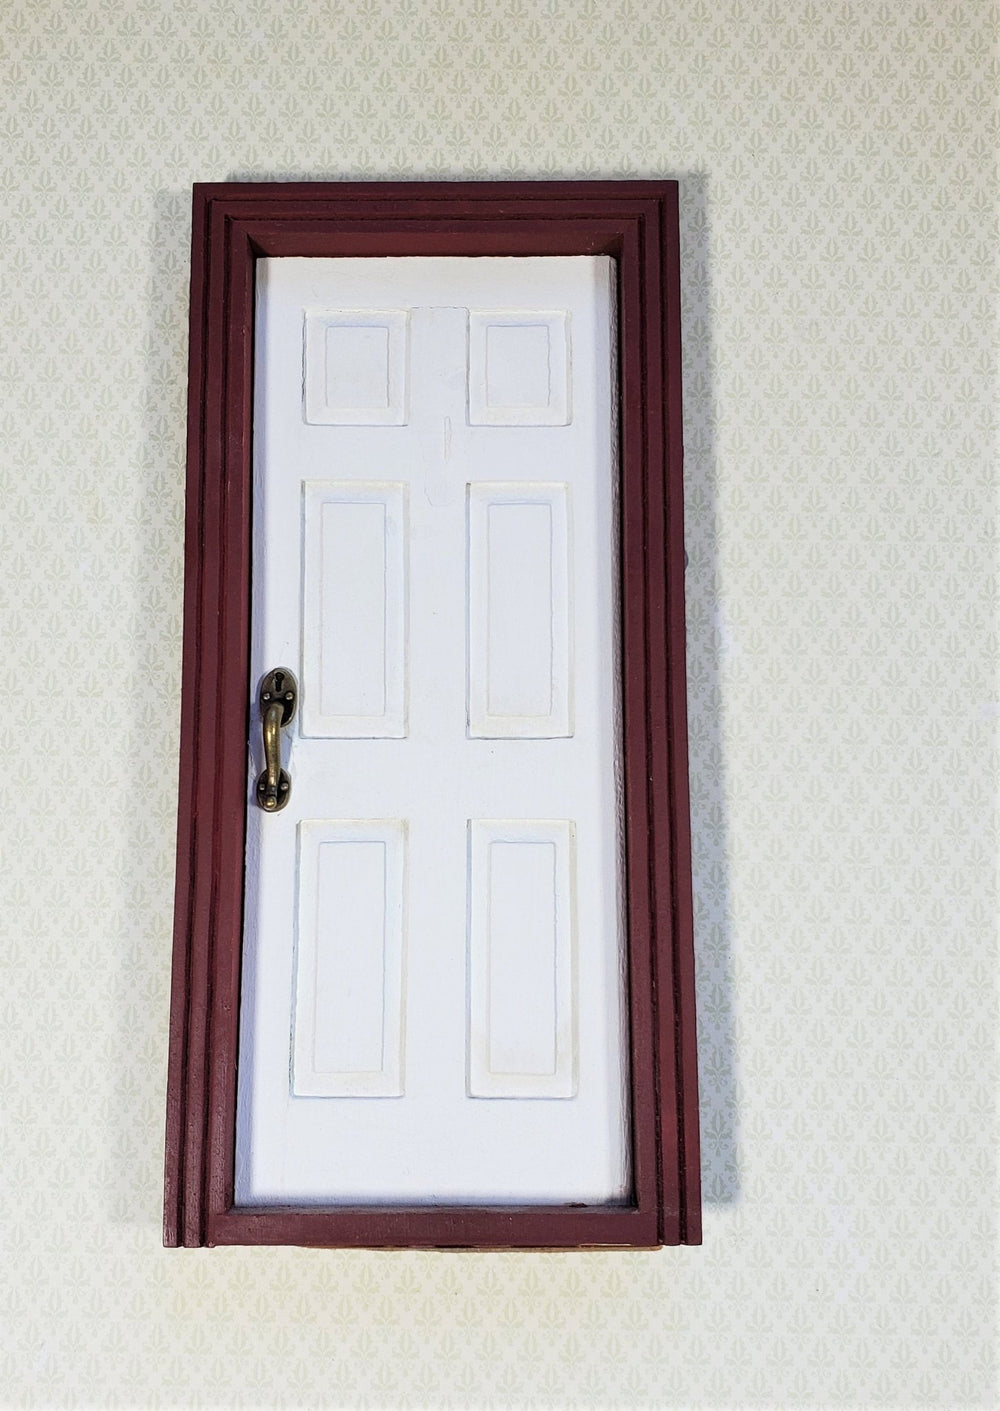 Dollhouse Miniature Door Handles Large with Keyhole 1:12 Scale Antique Bronze - Miniature Crush